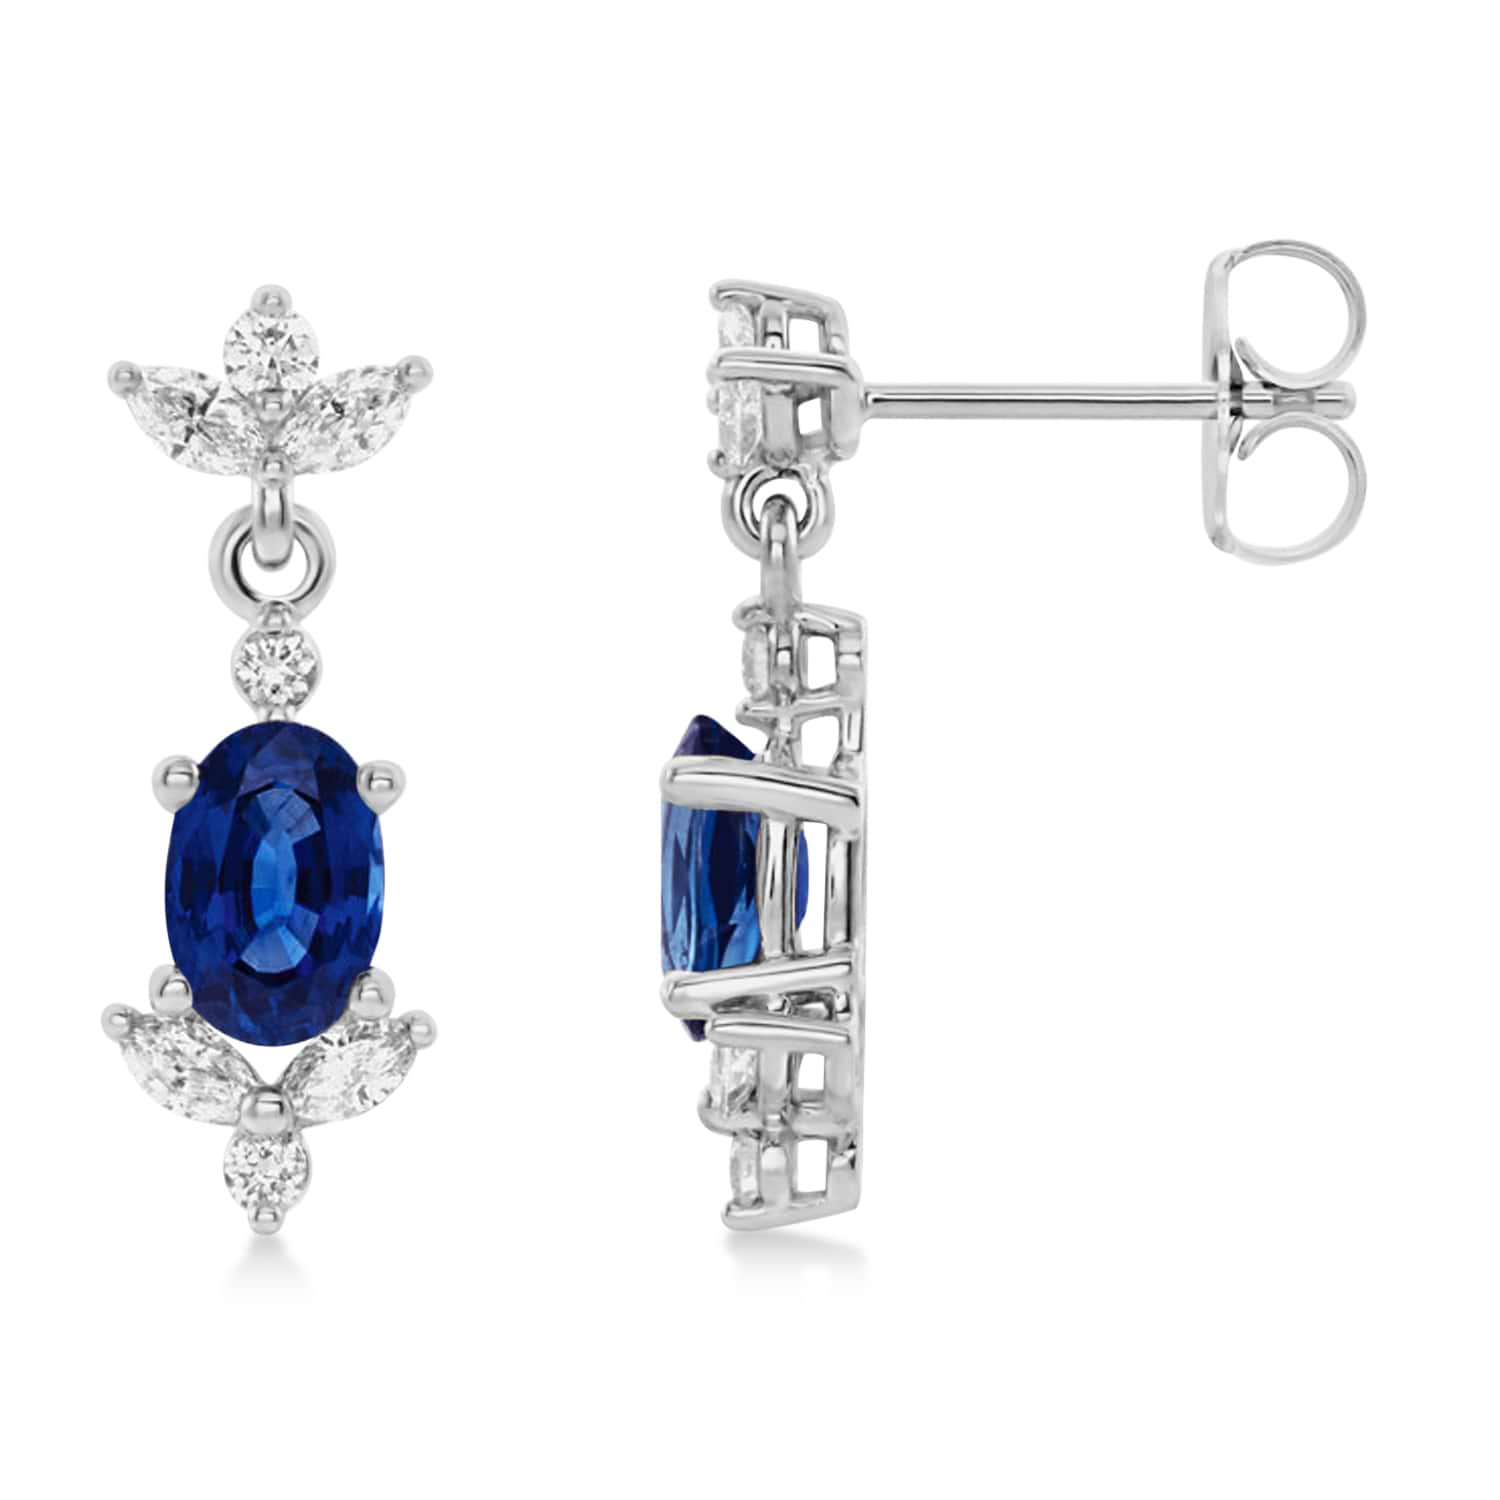 Blue Sapphire Dangling Earrings Diamonds on Edge 14k White Gold (1.78ct)